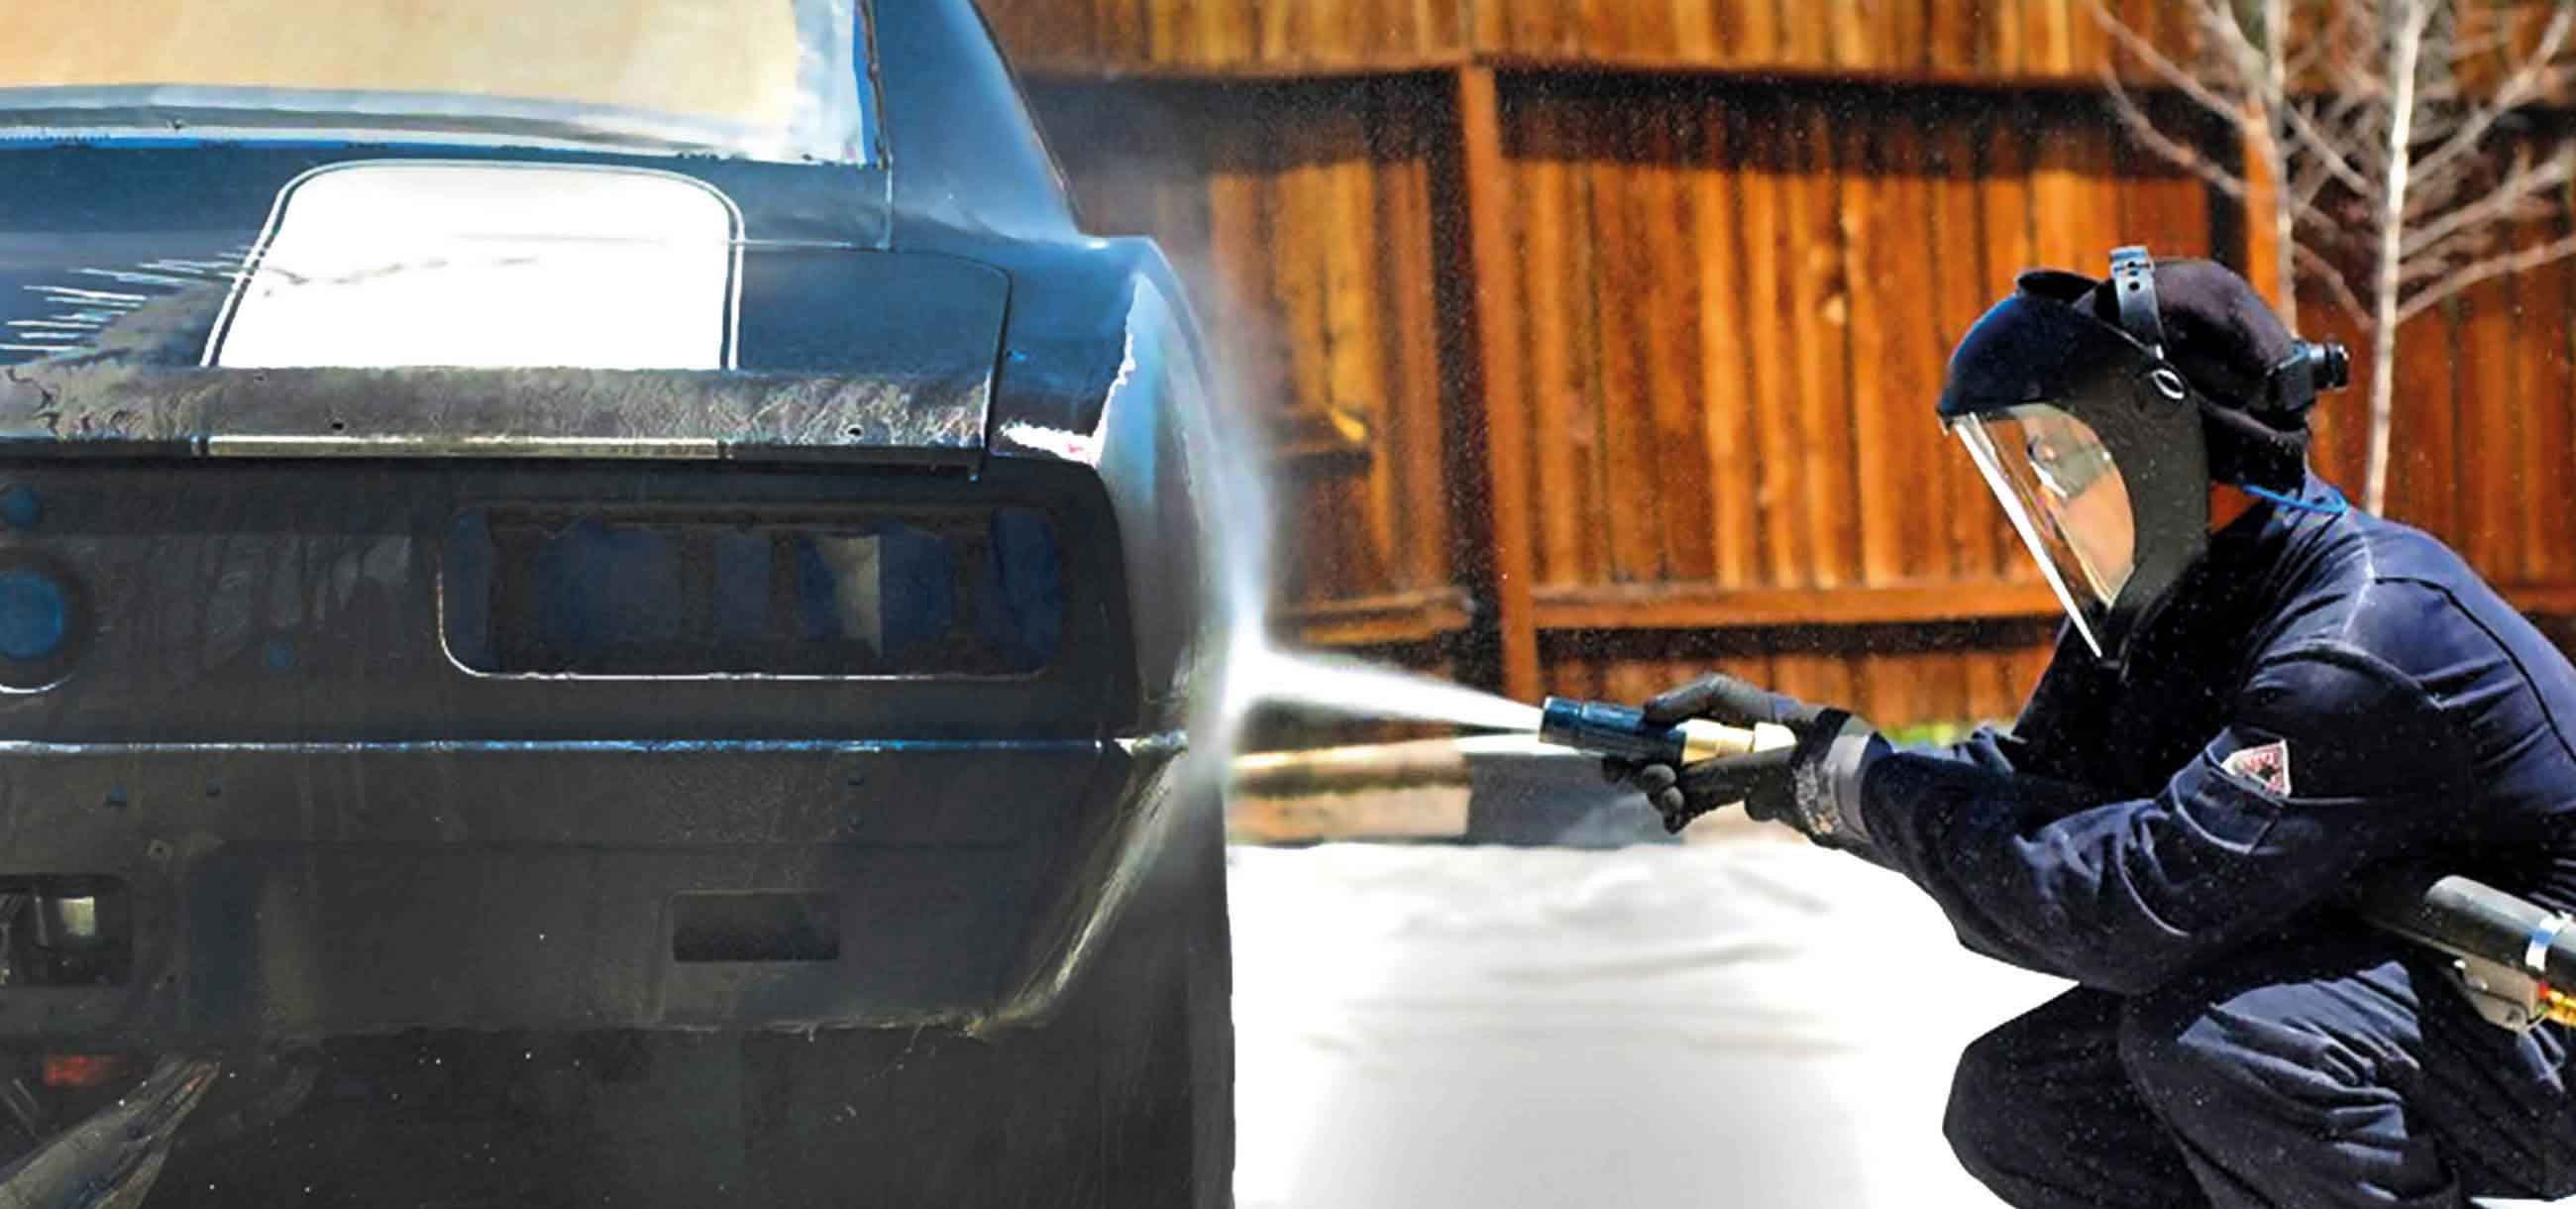 Vapor blasting a car